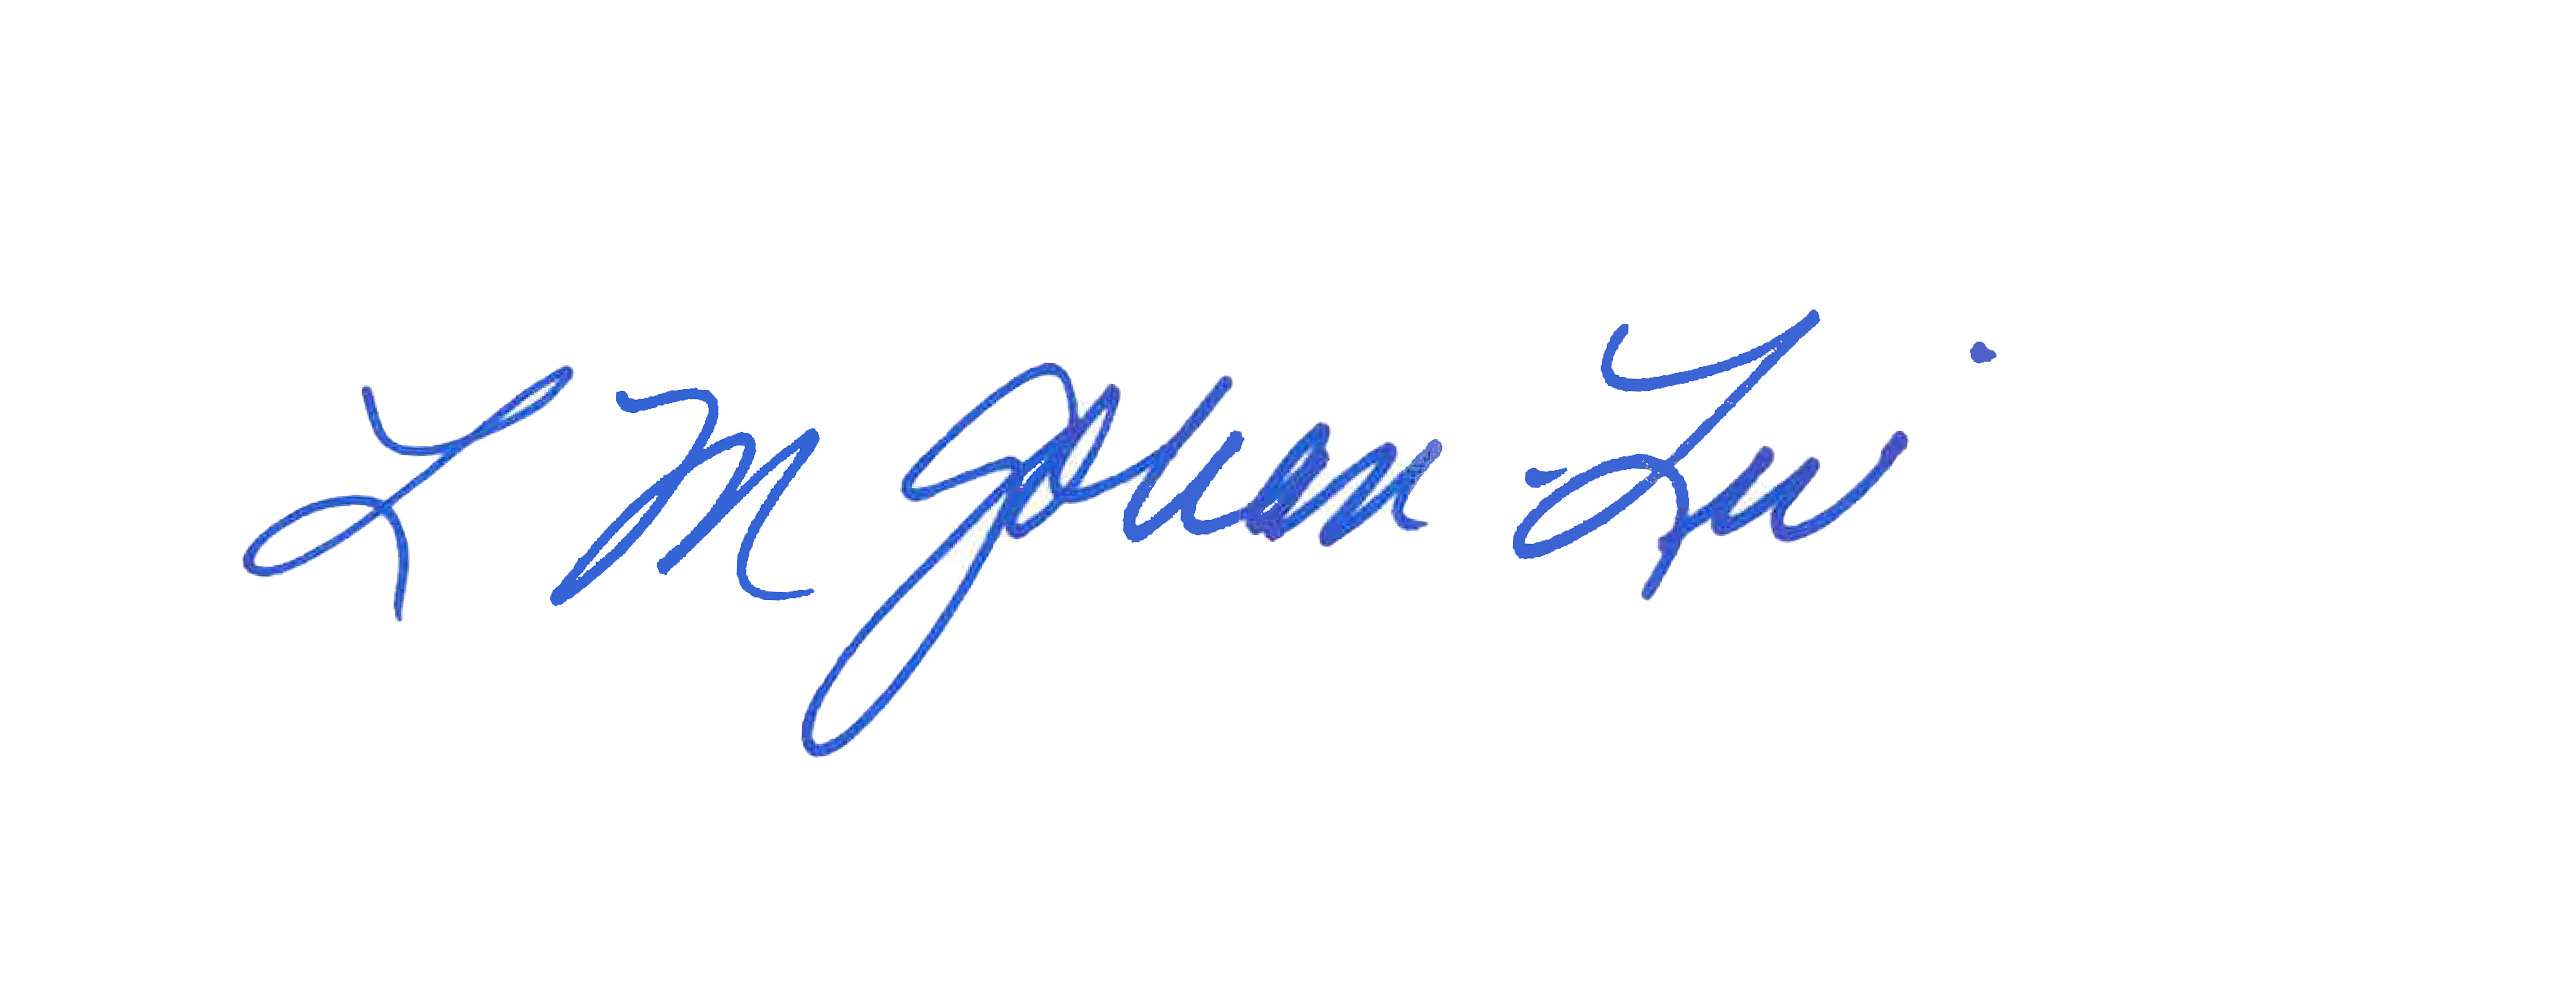 Linda Golian-Lui signature